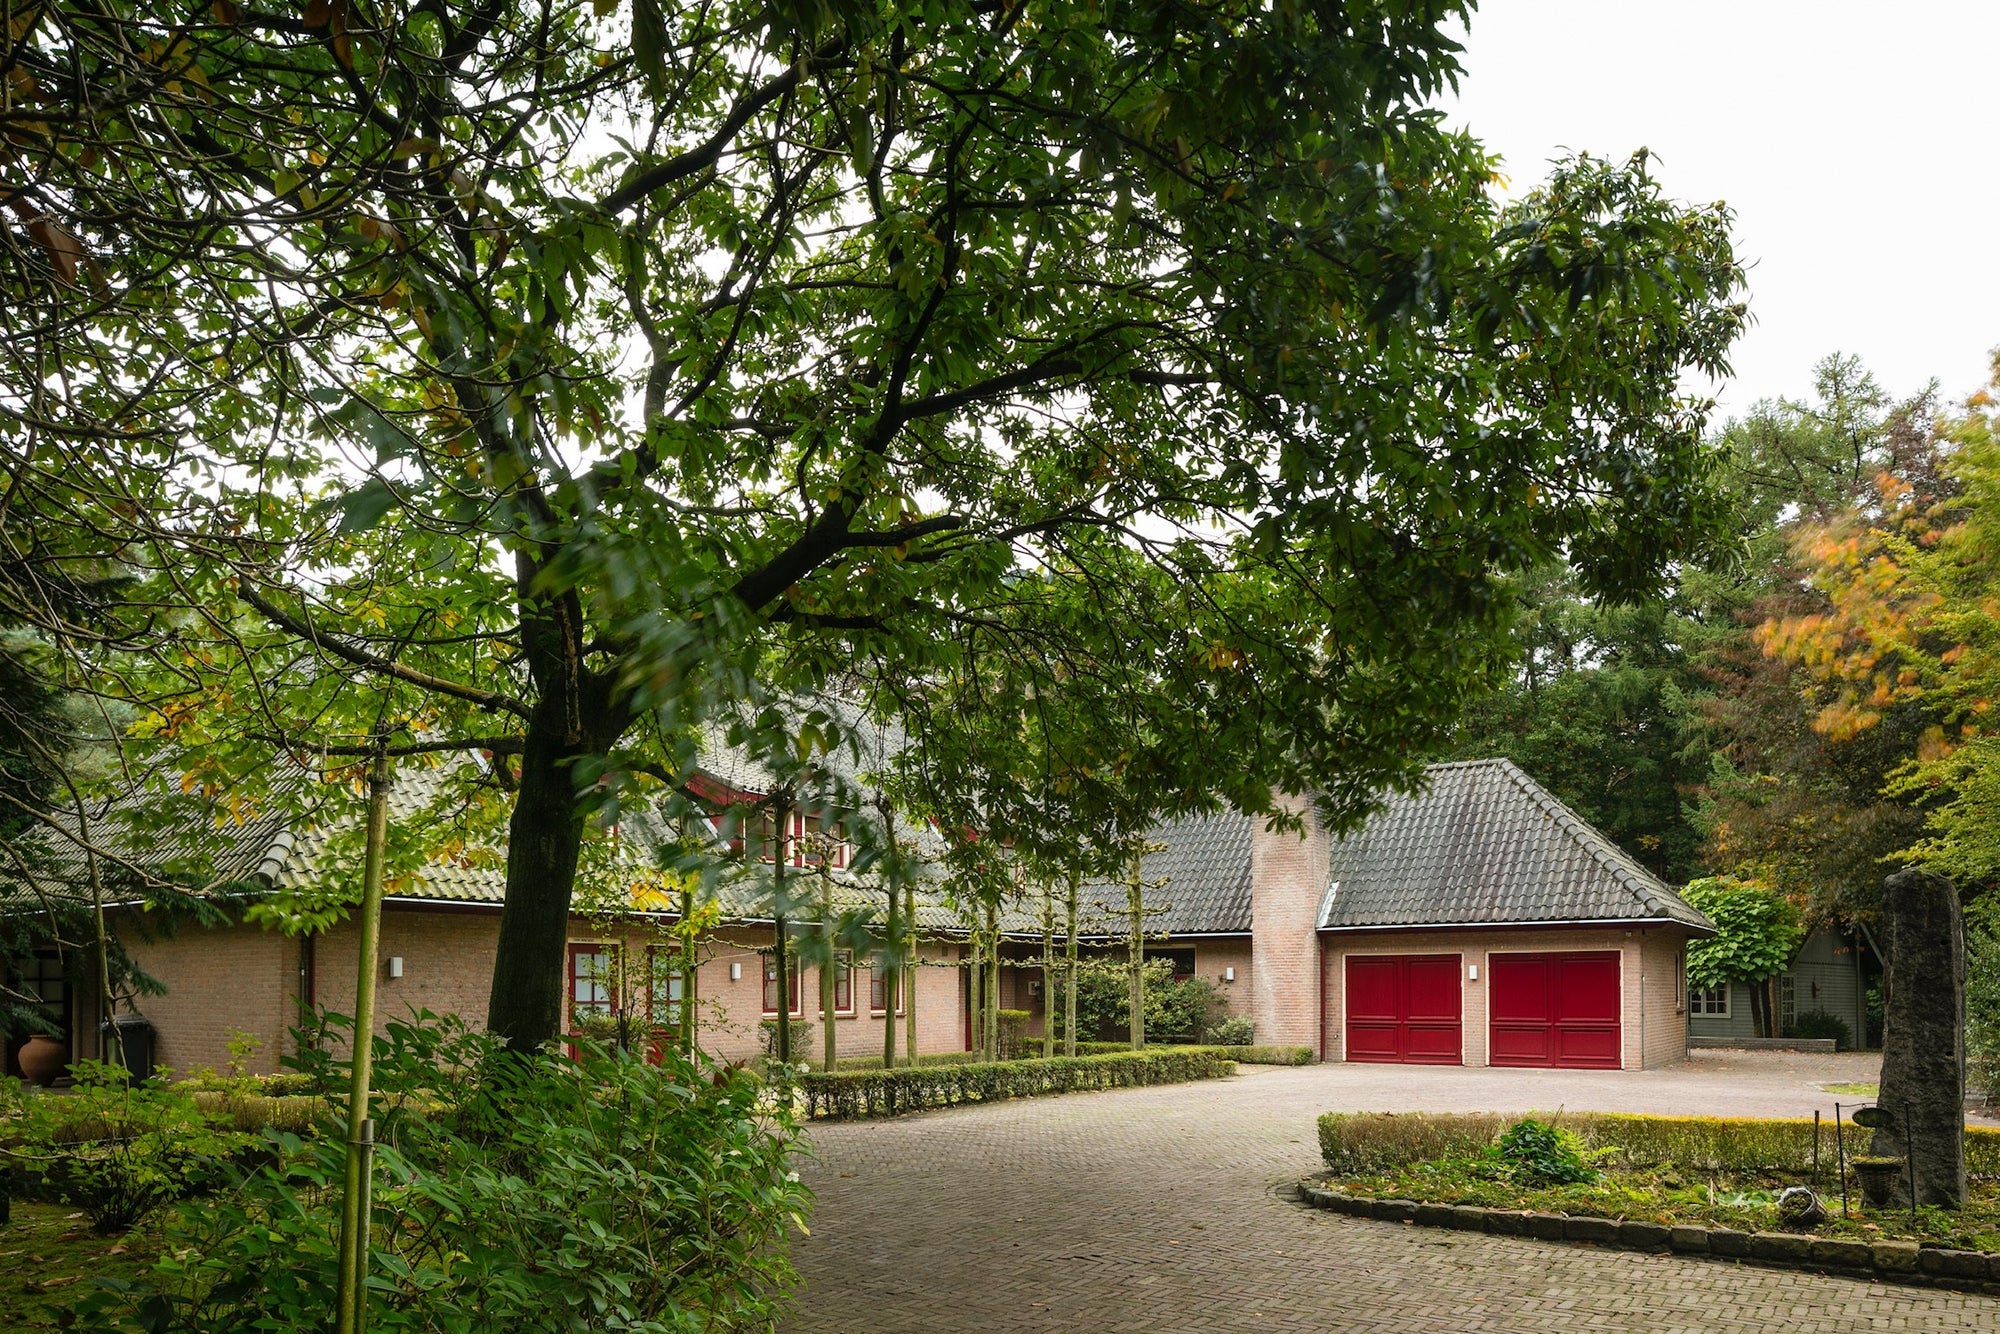 Woning in Lieshout - Molenheide